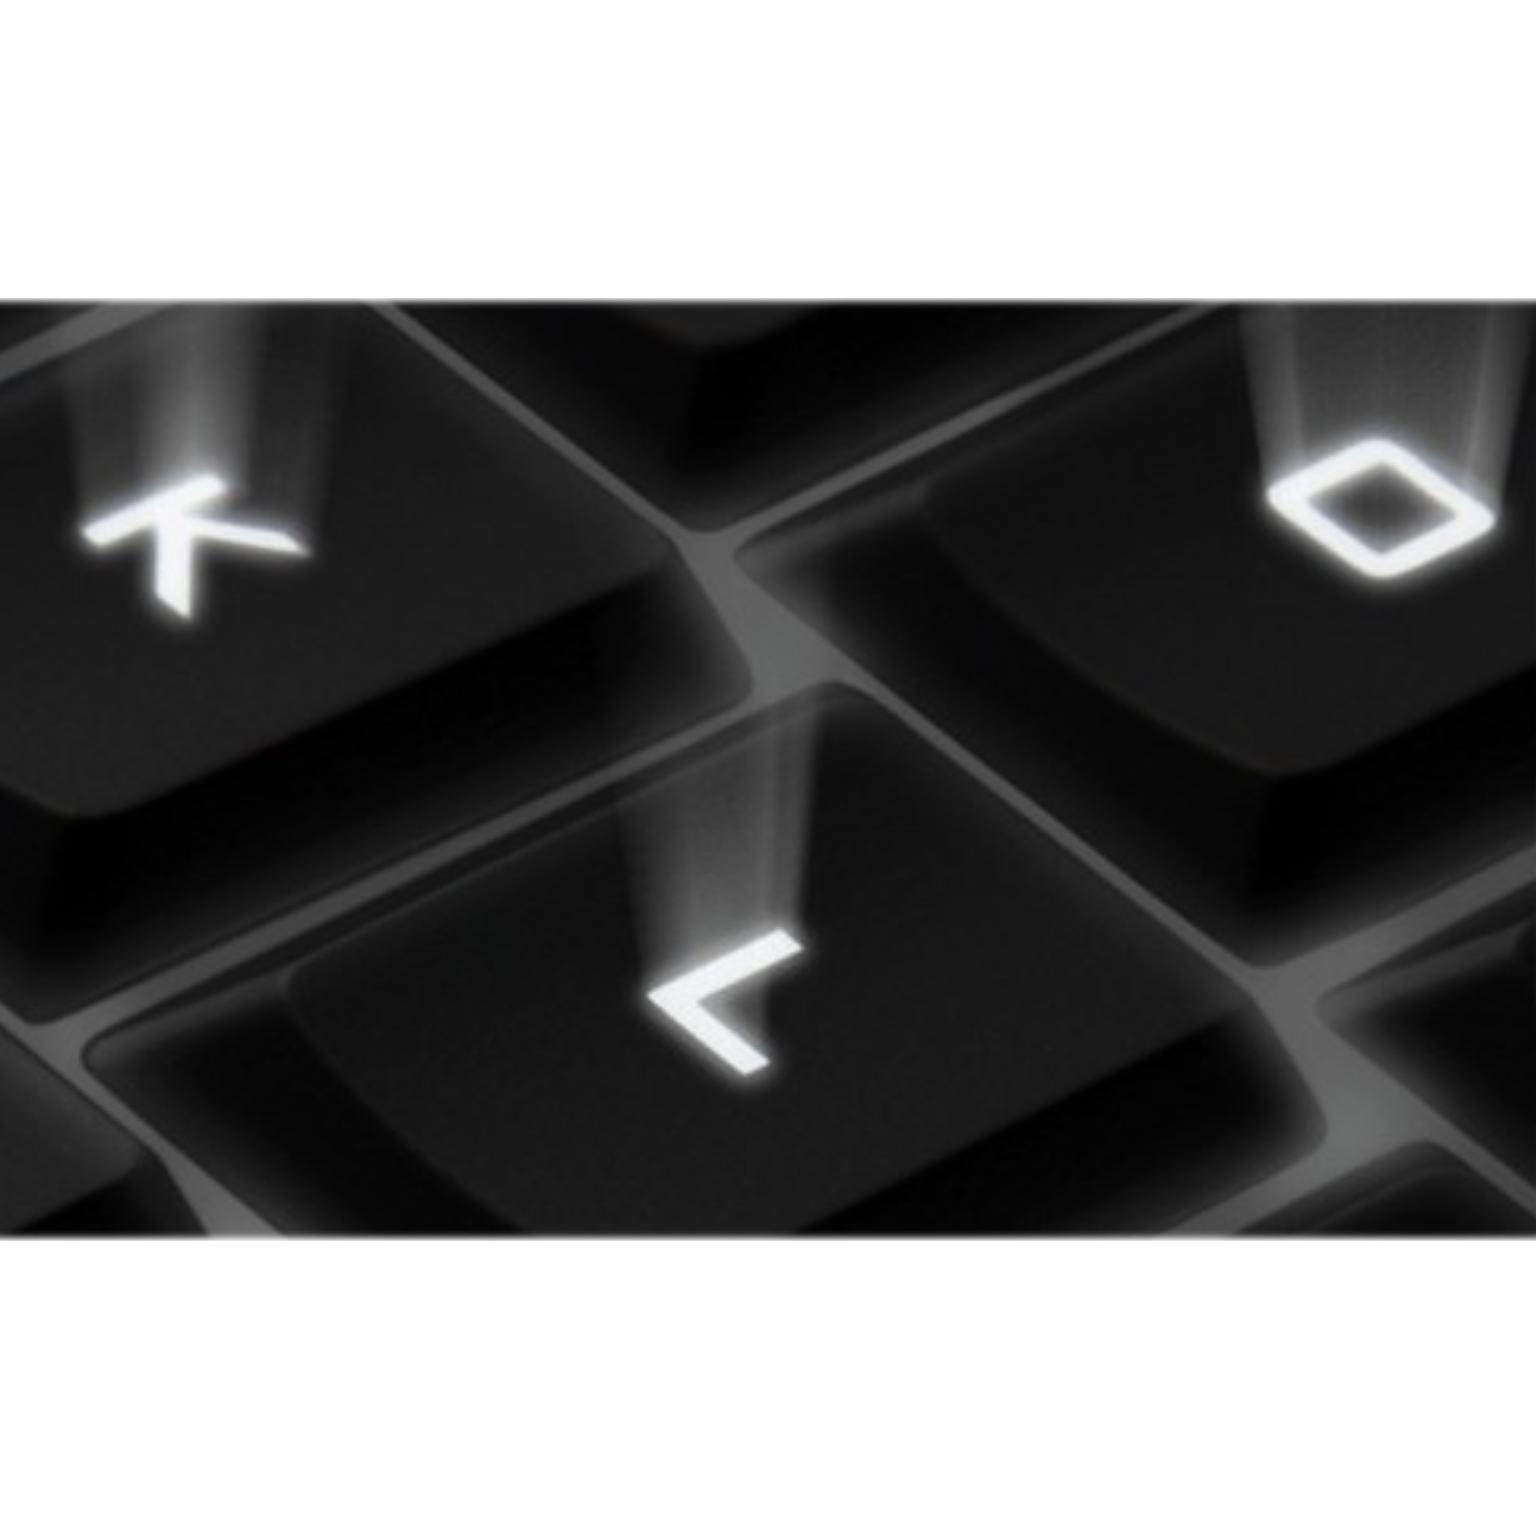 Vlieger vrijheid argument Bedraad toetsenbord - Logitech - Merk: Logitech Illuminated Keyboard K740,  Indeling: QWERTY - Scissor-switches, Aansluiting: Bedraad USB, Extra:  Ultradun design, Kabellengte: 1.8m.